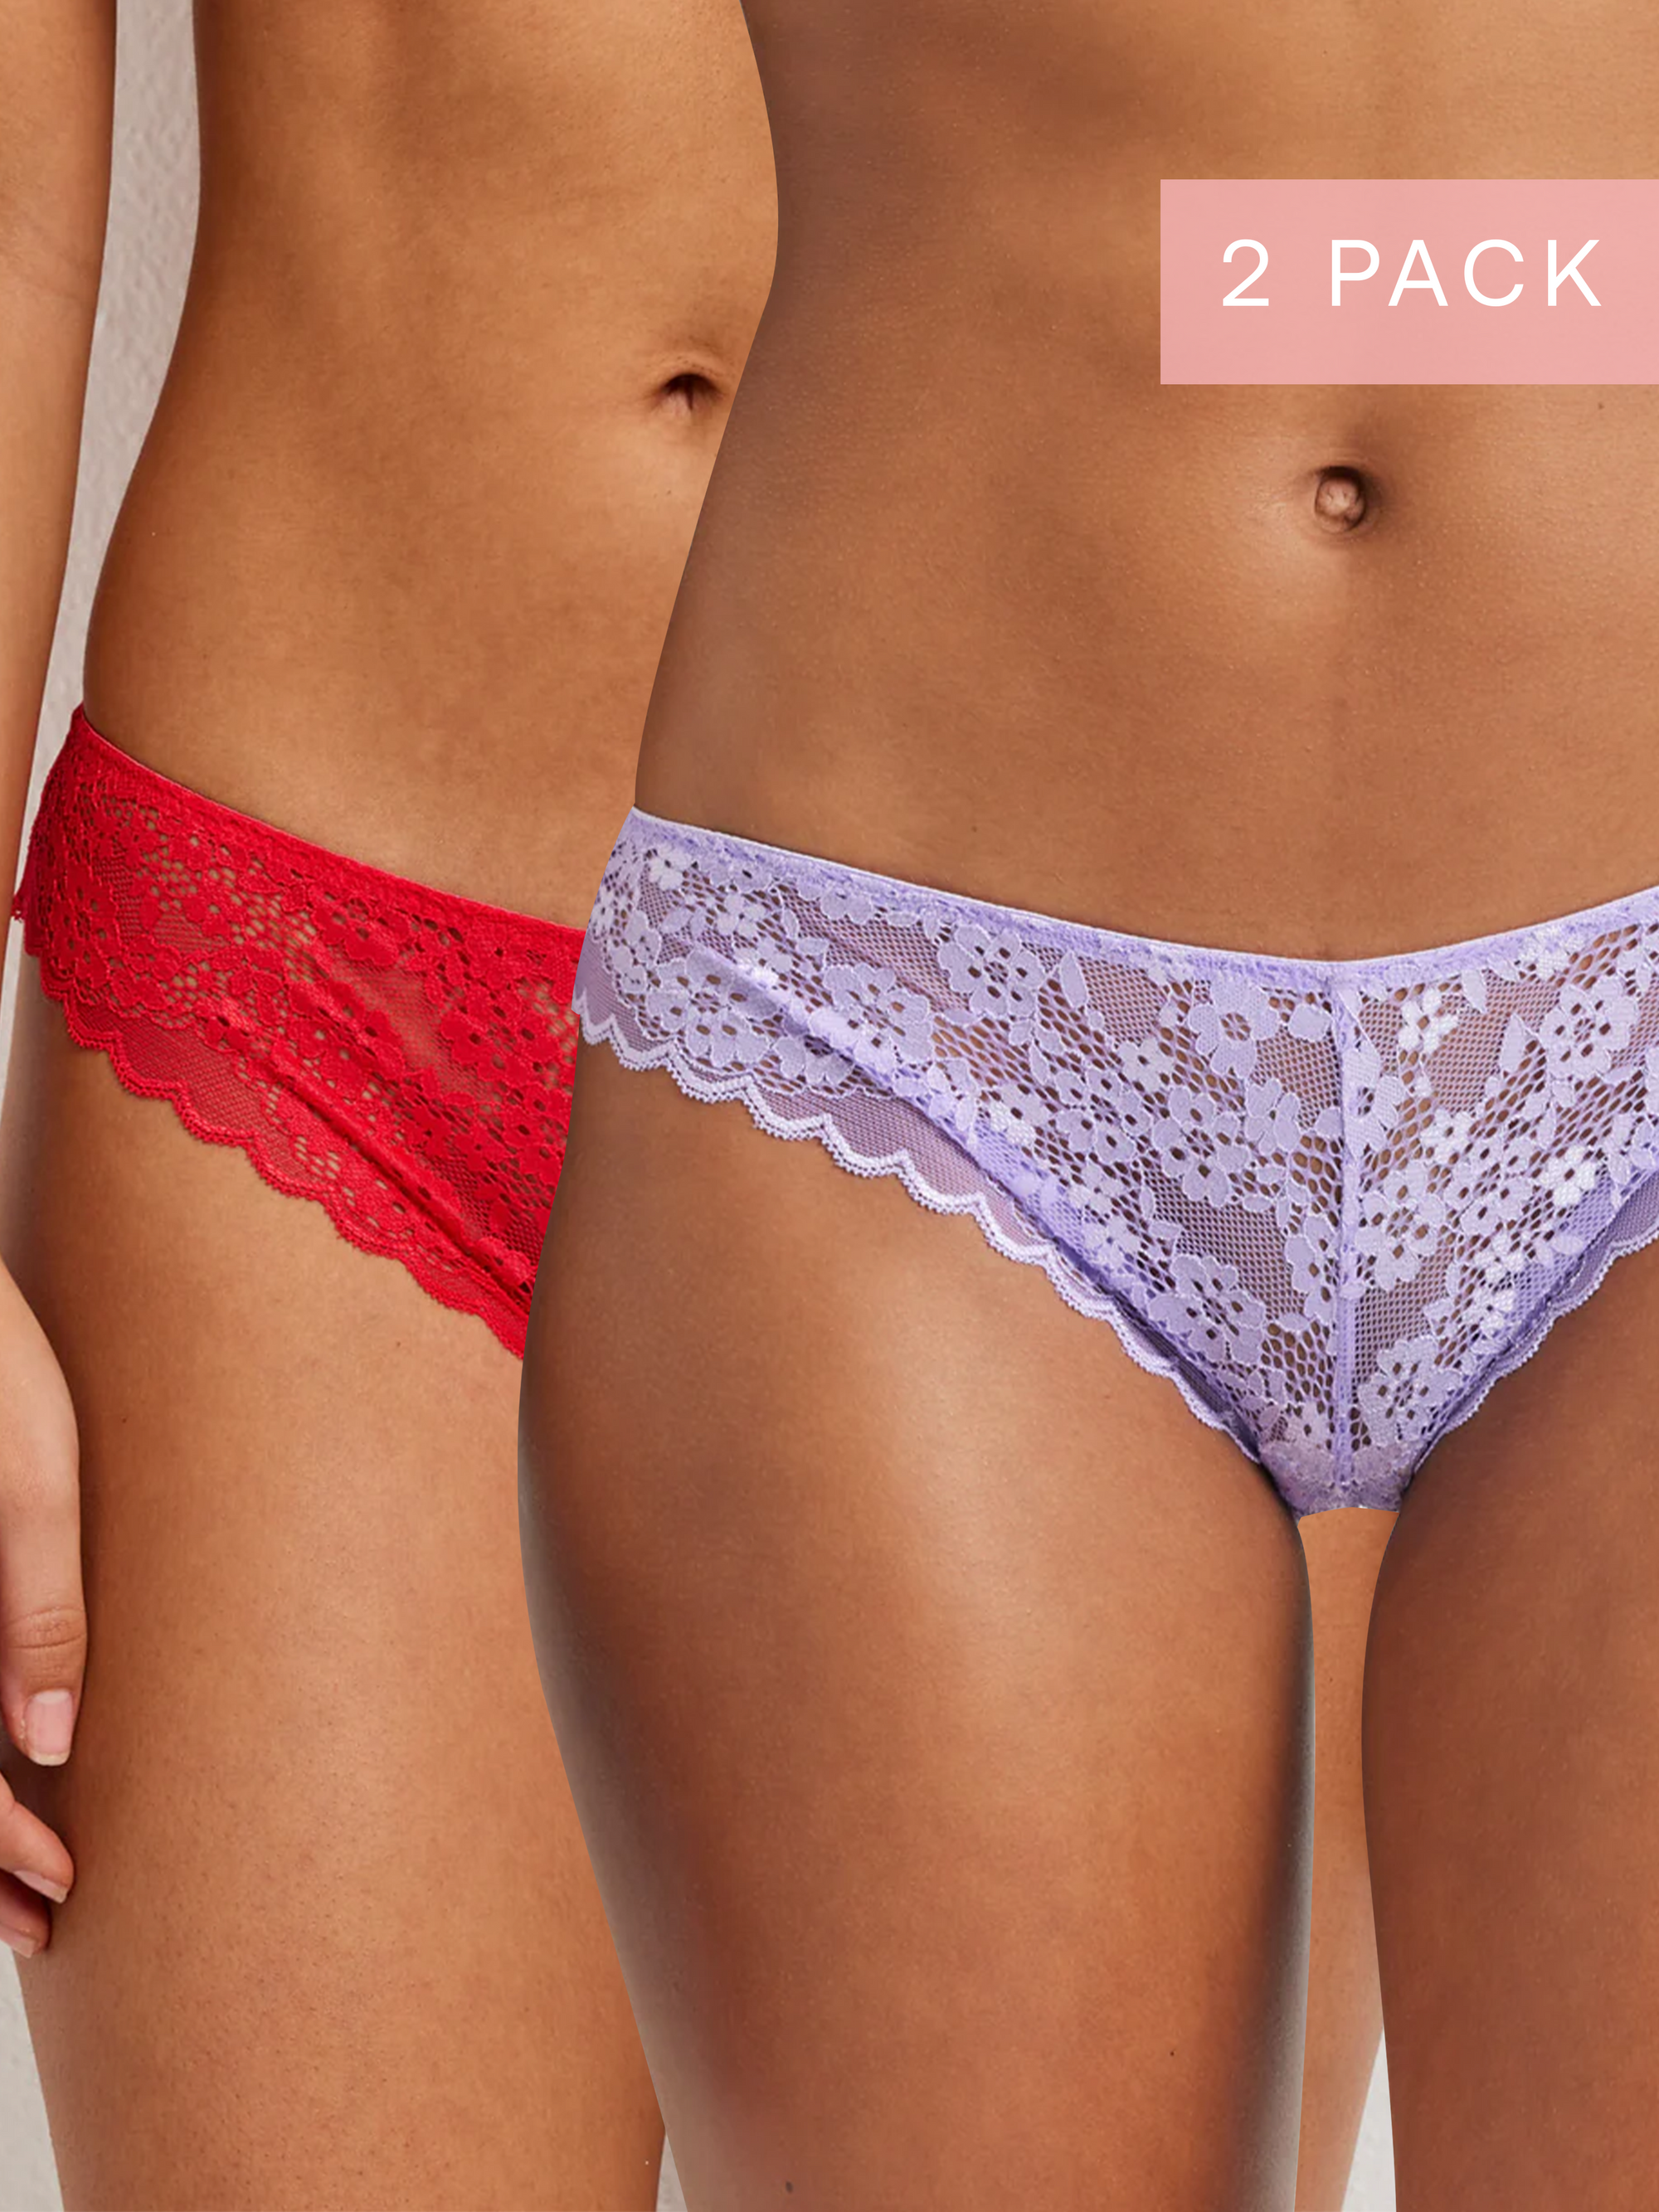 2 Pack Be Free Lace Brazilian Bikini in Purple & Red - Kayser Lingerie